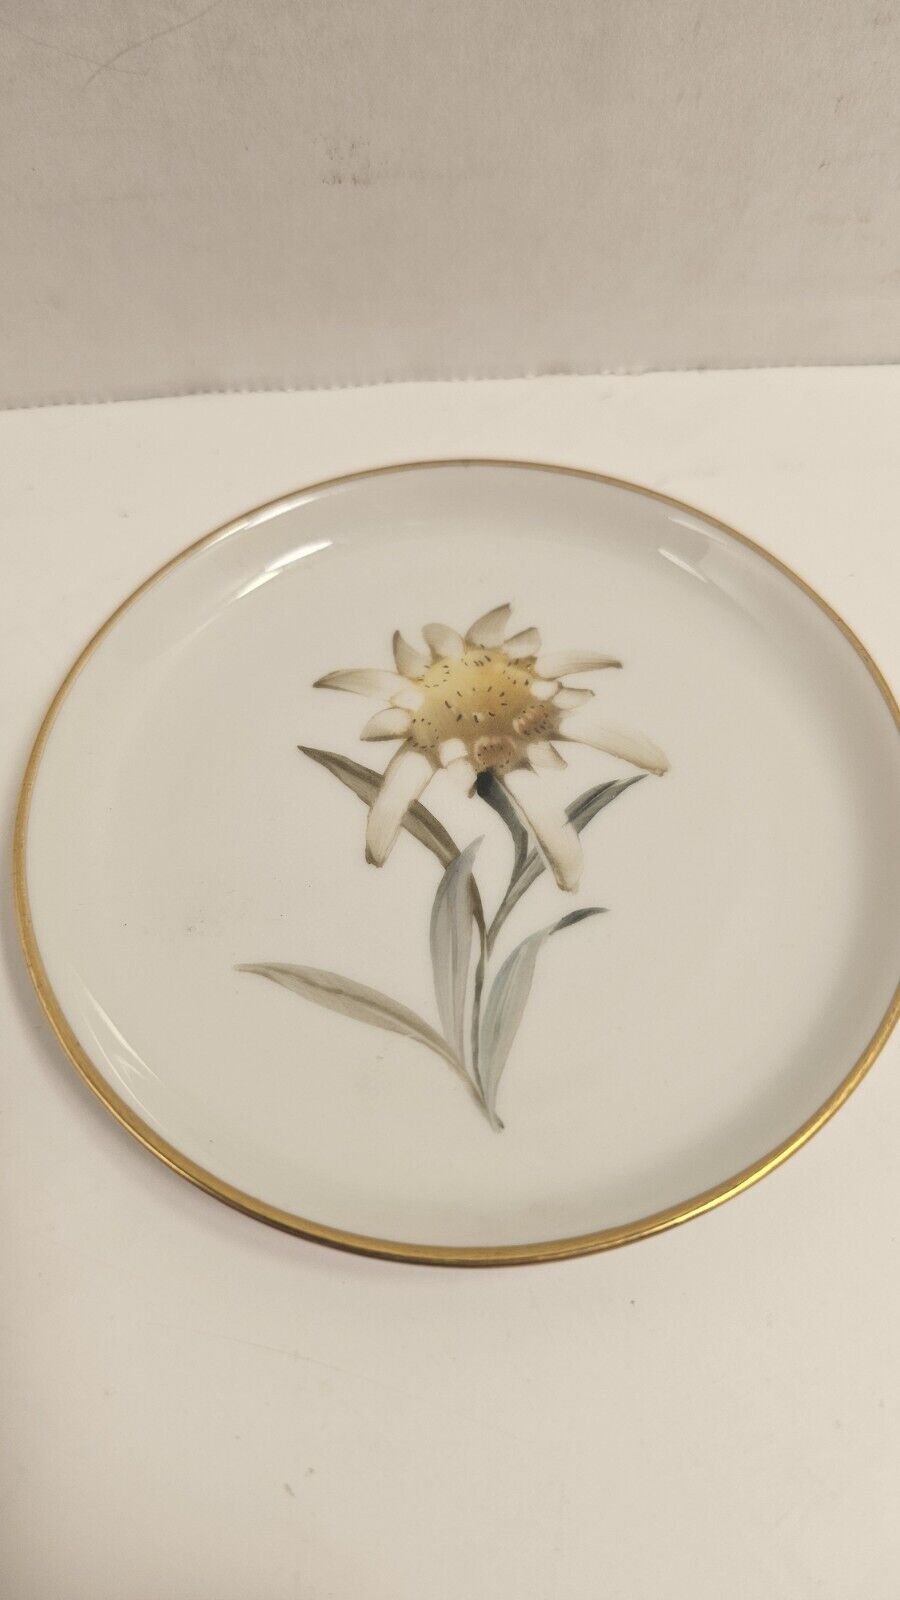 Rosenthal Handmalerei Germany Gold Rim Butter Pat Plate  Edelweiss Alpine Flower